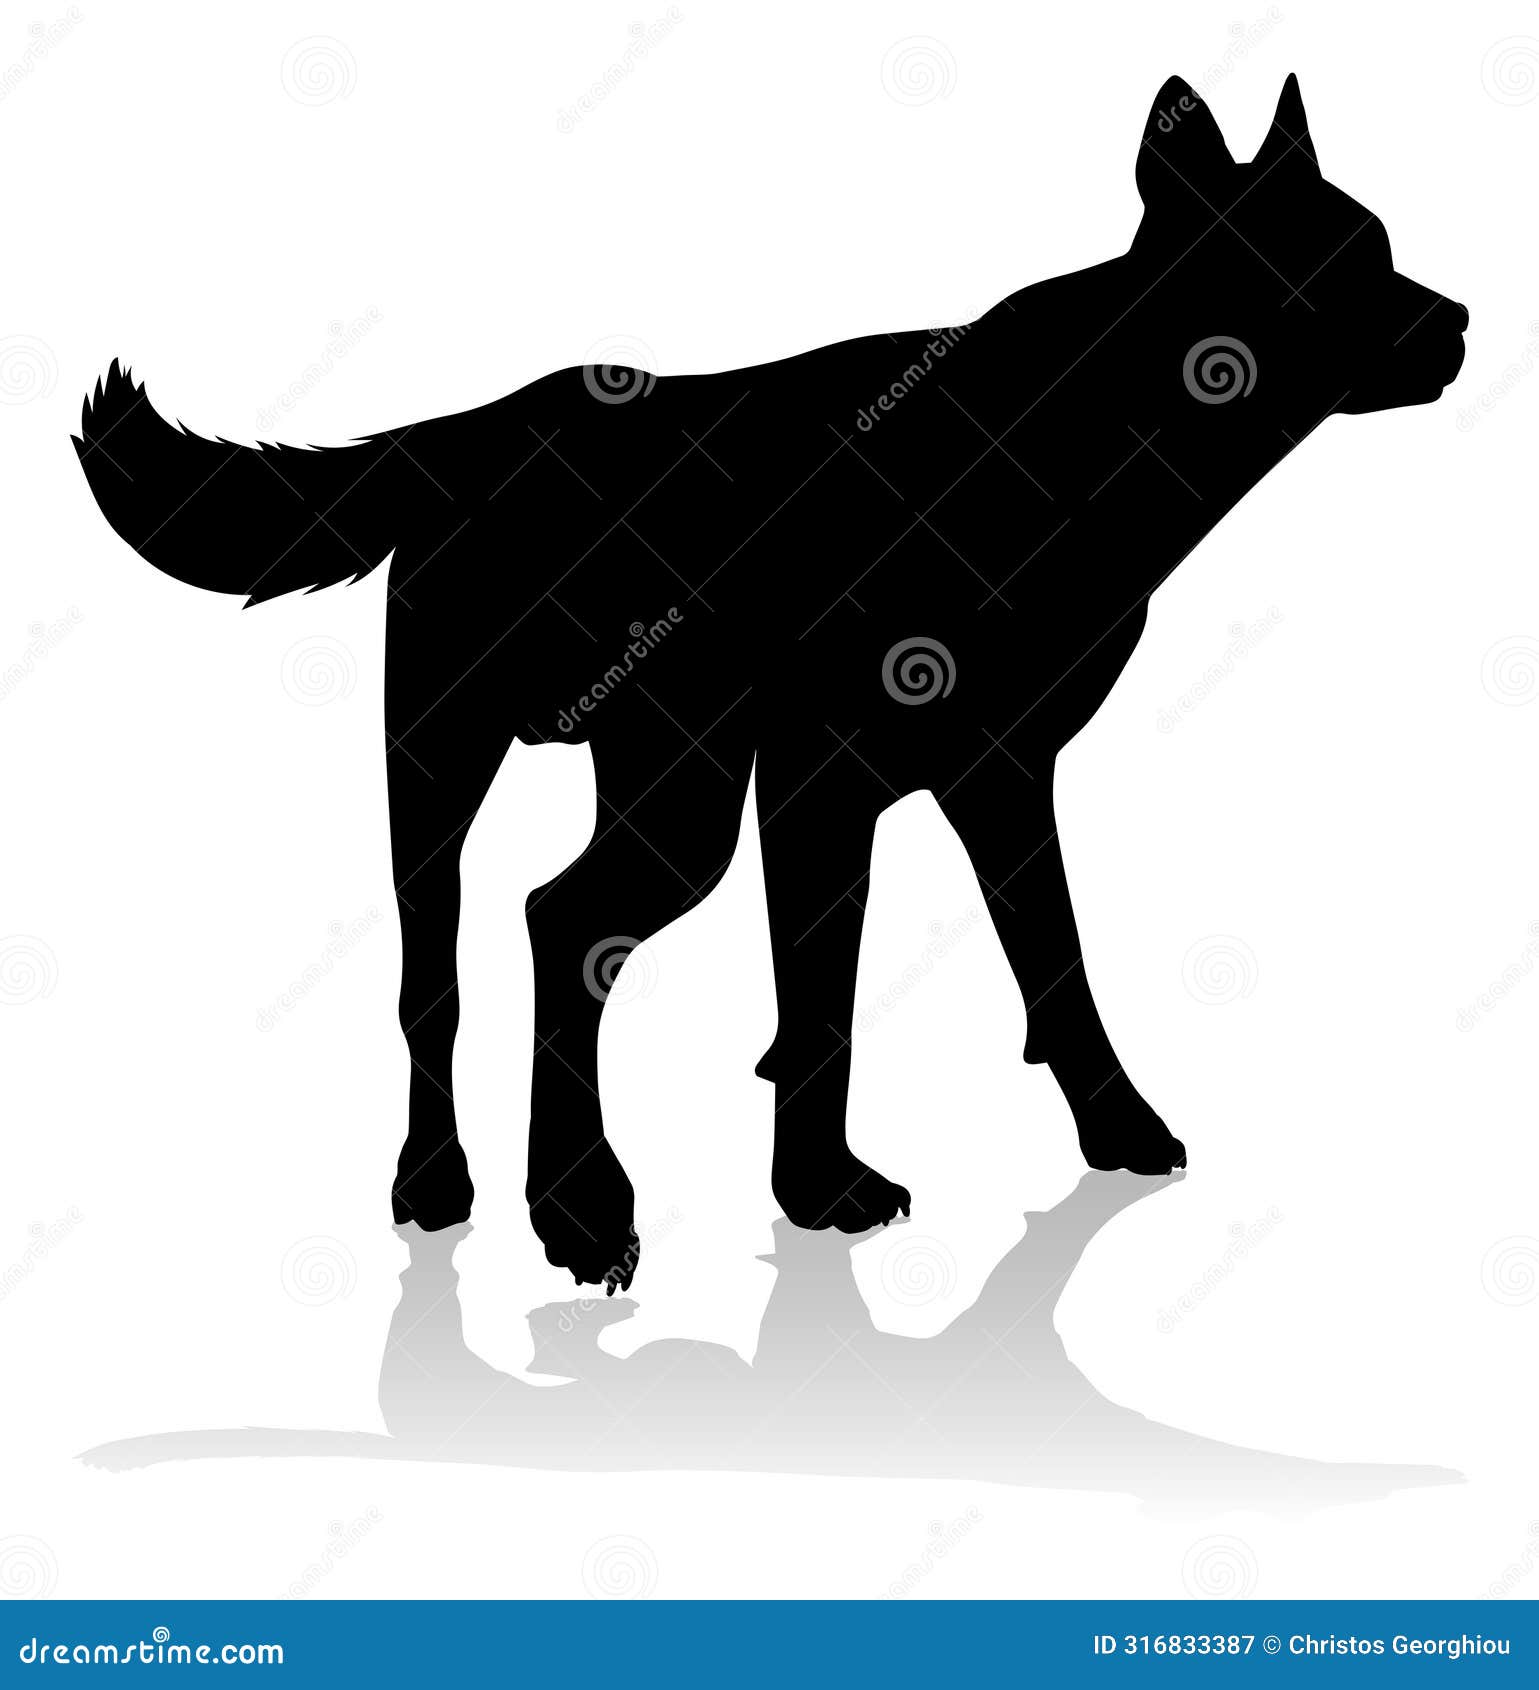 dog silhouette pet animal